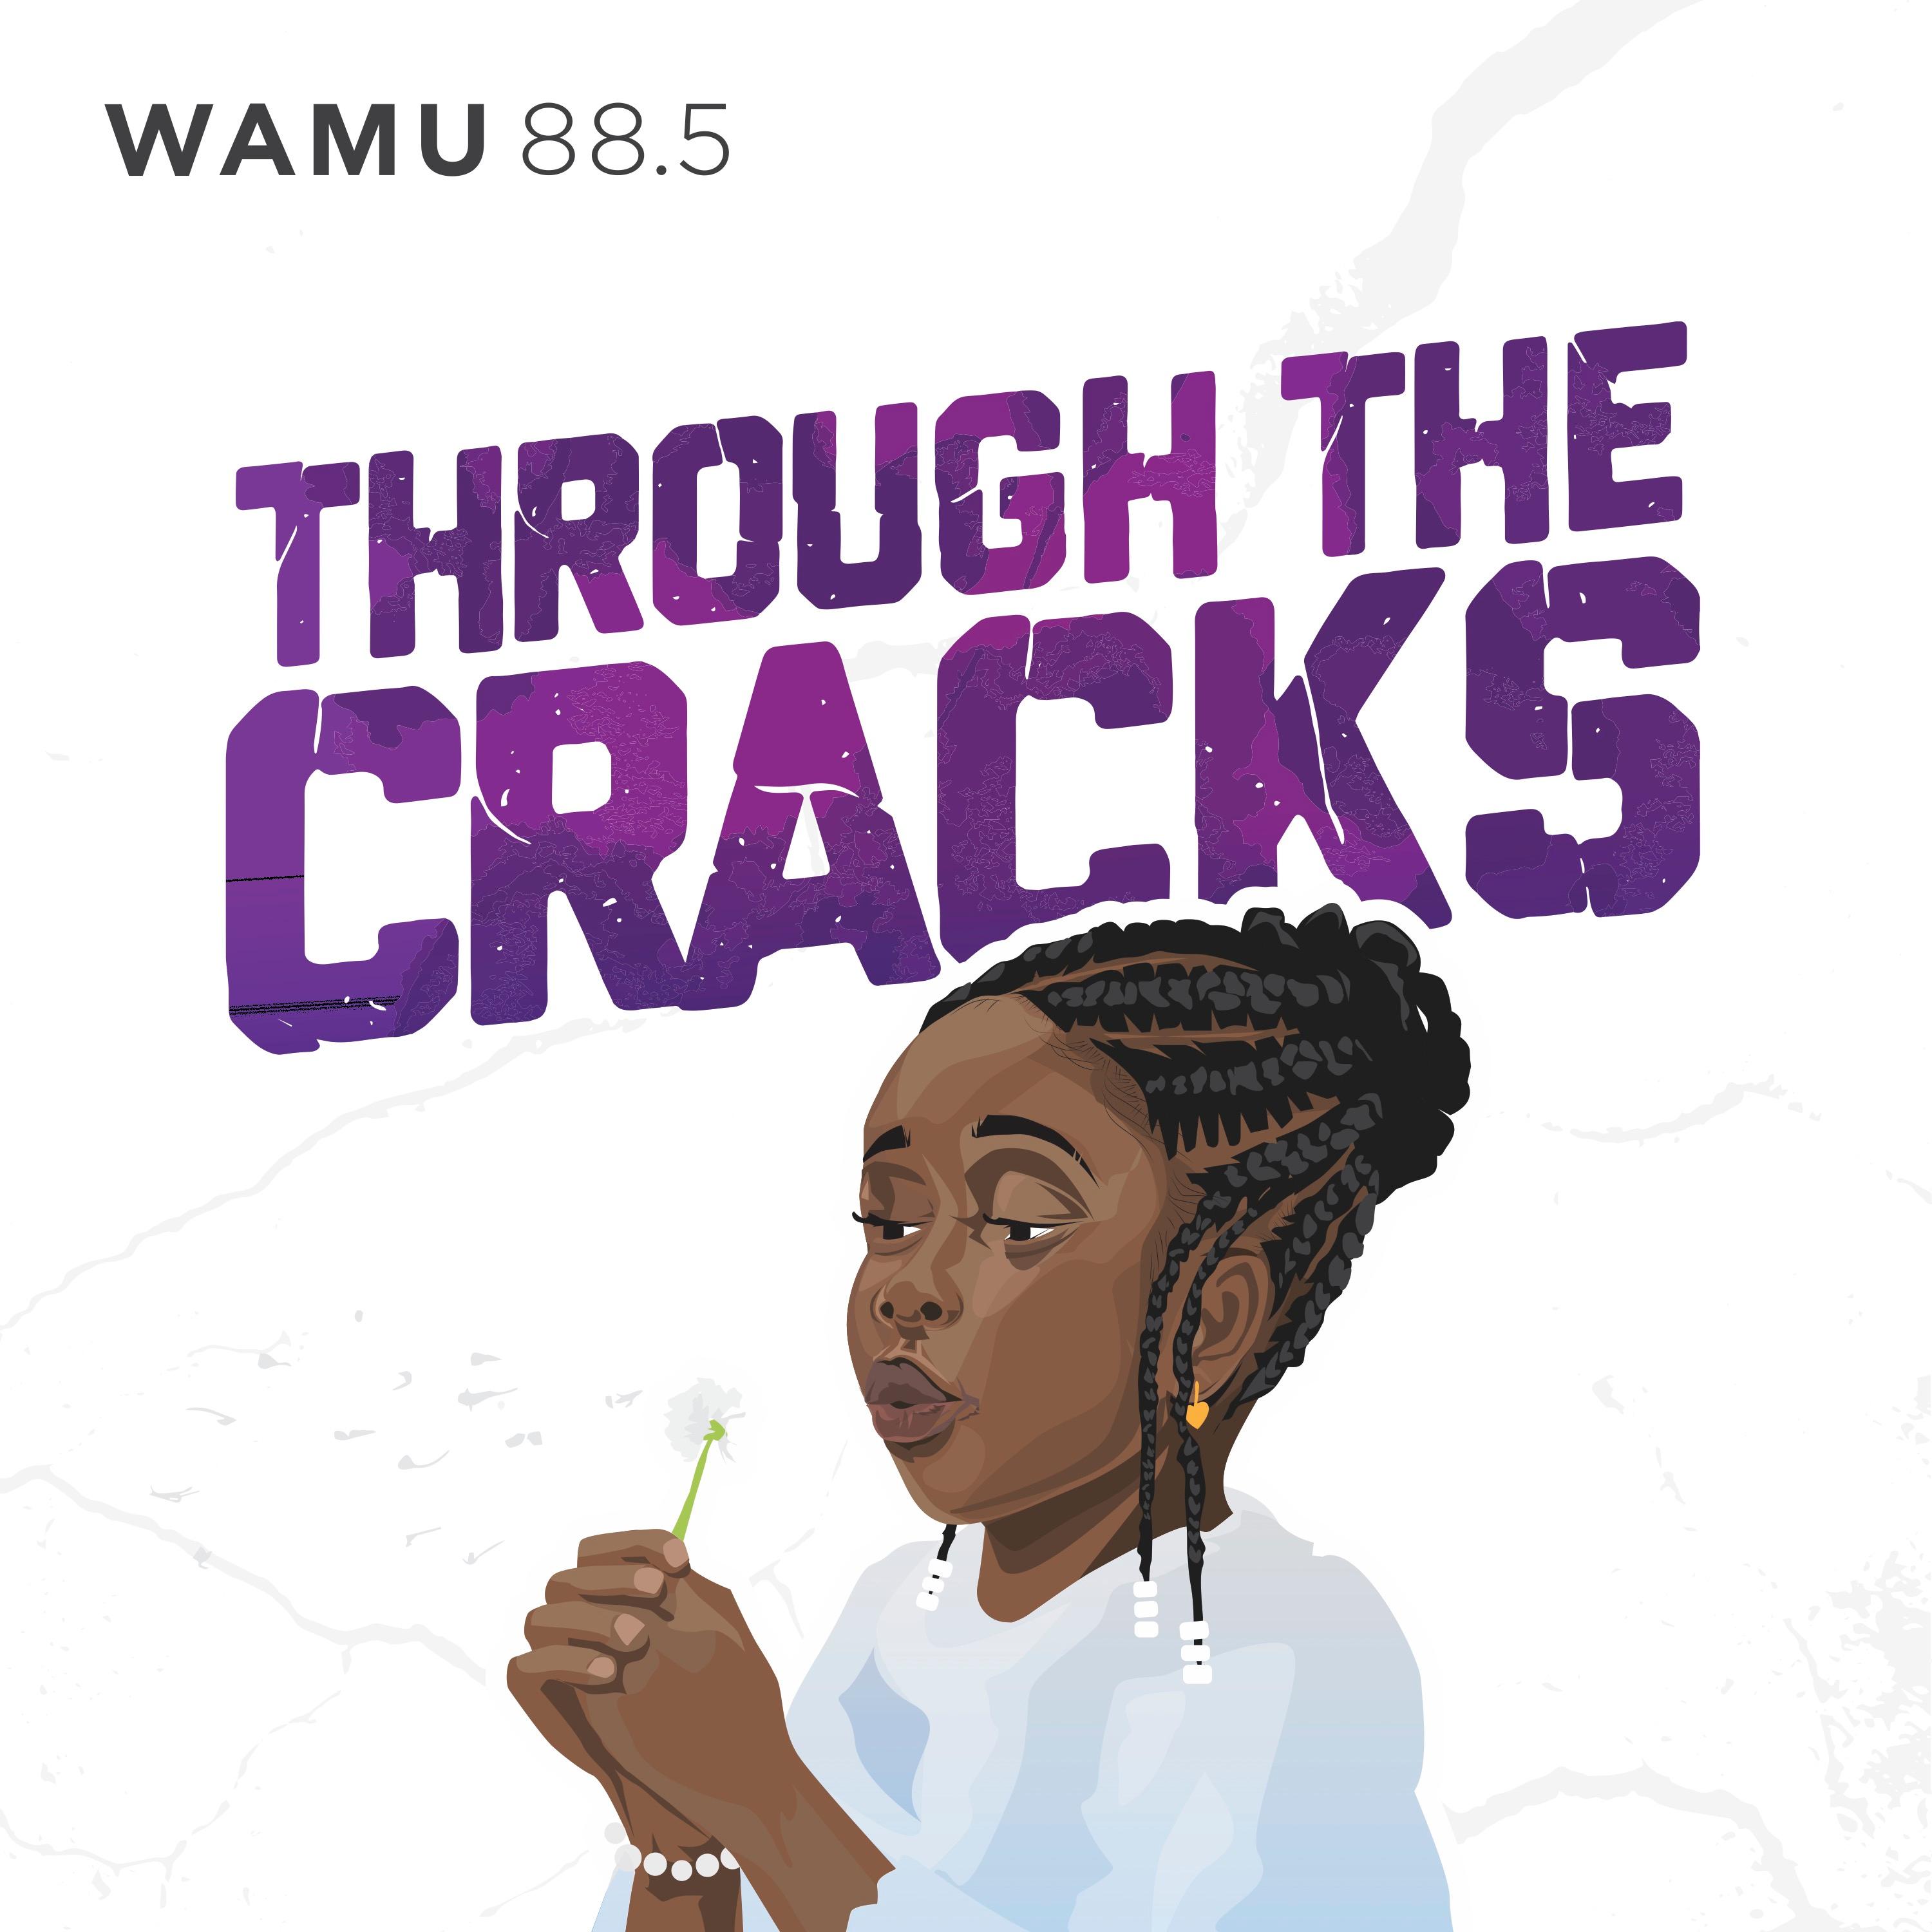 Thumbnail for "Through the Cracks".